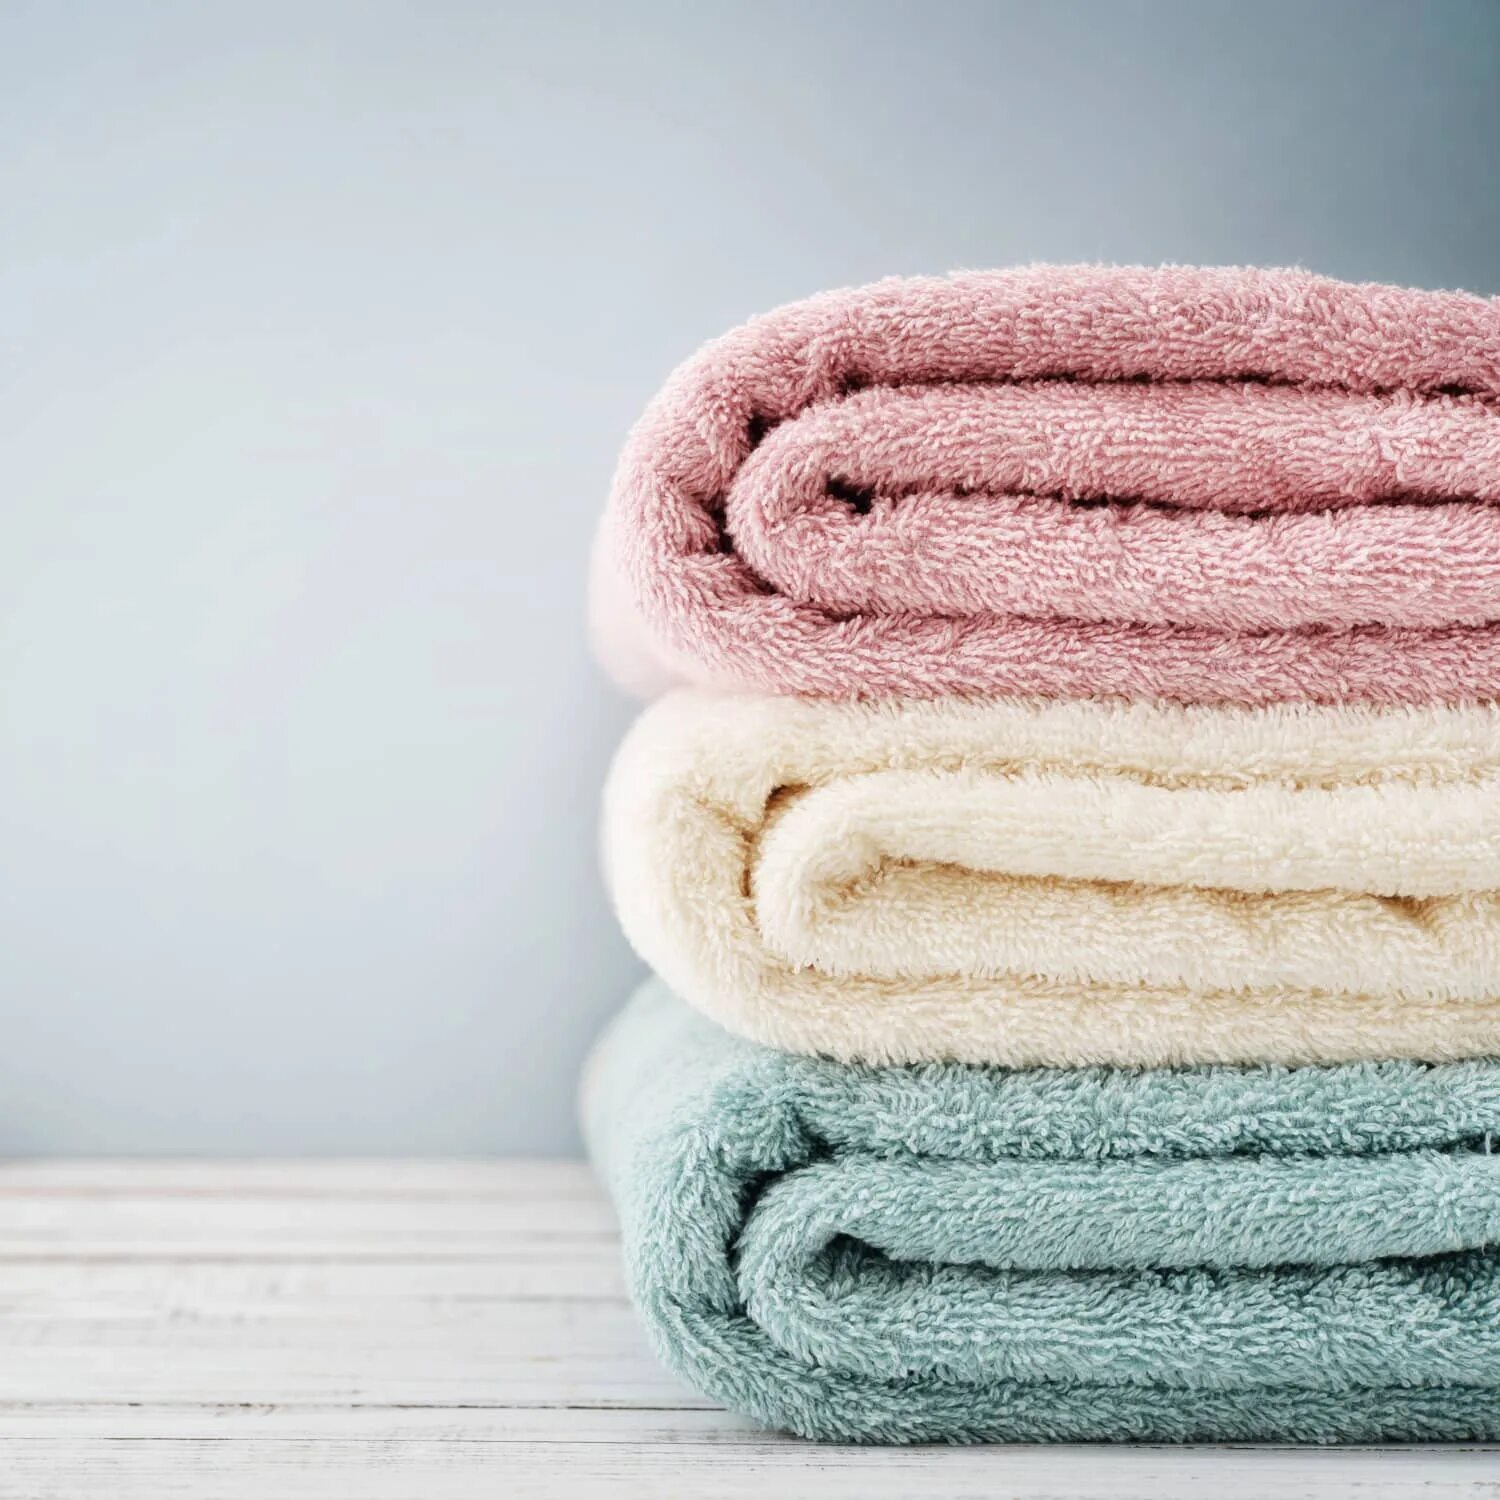 Нежные полотенца. Красивые полотенца. Полотенце махровое. Текстиль полотенца. Красивые полотенца для ванной.